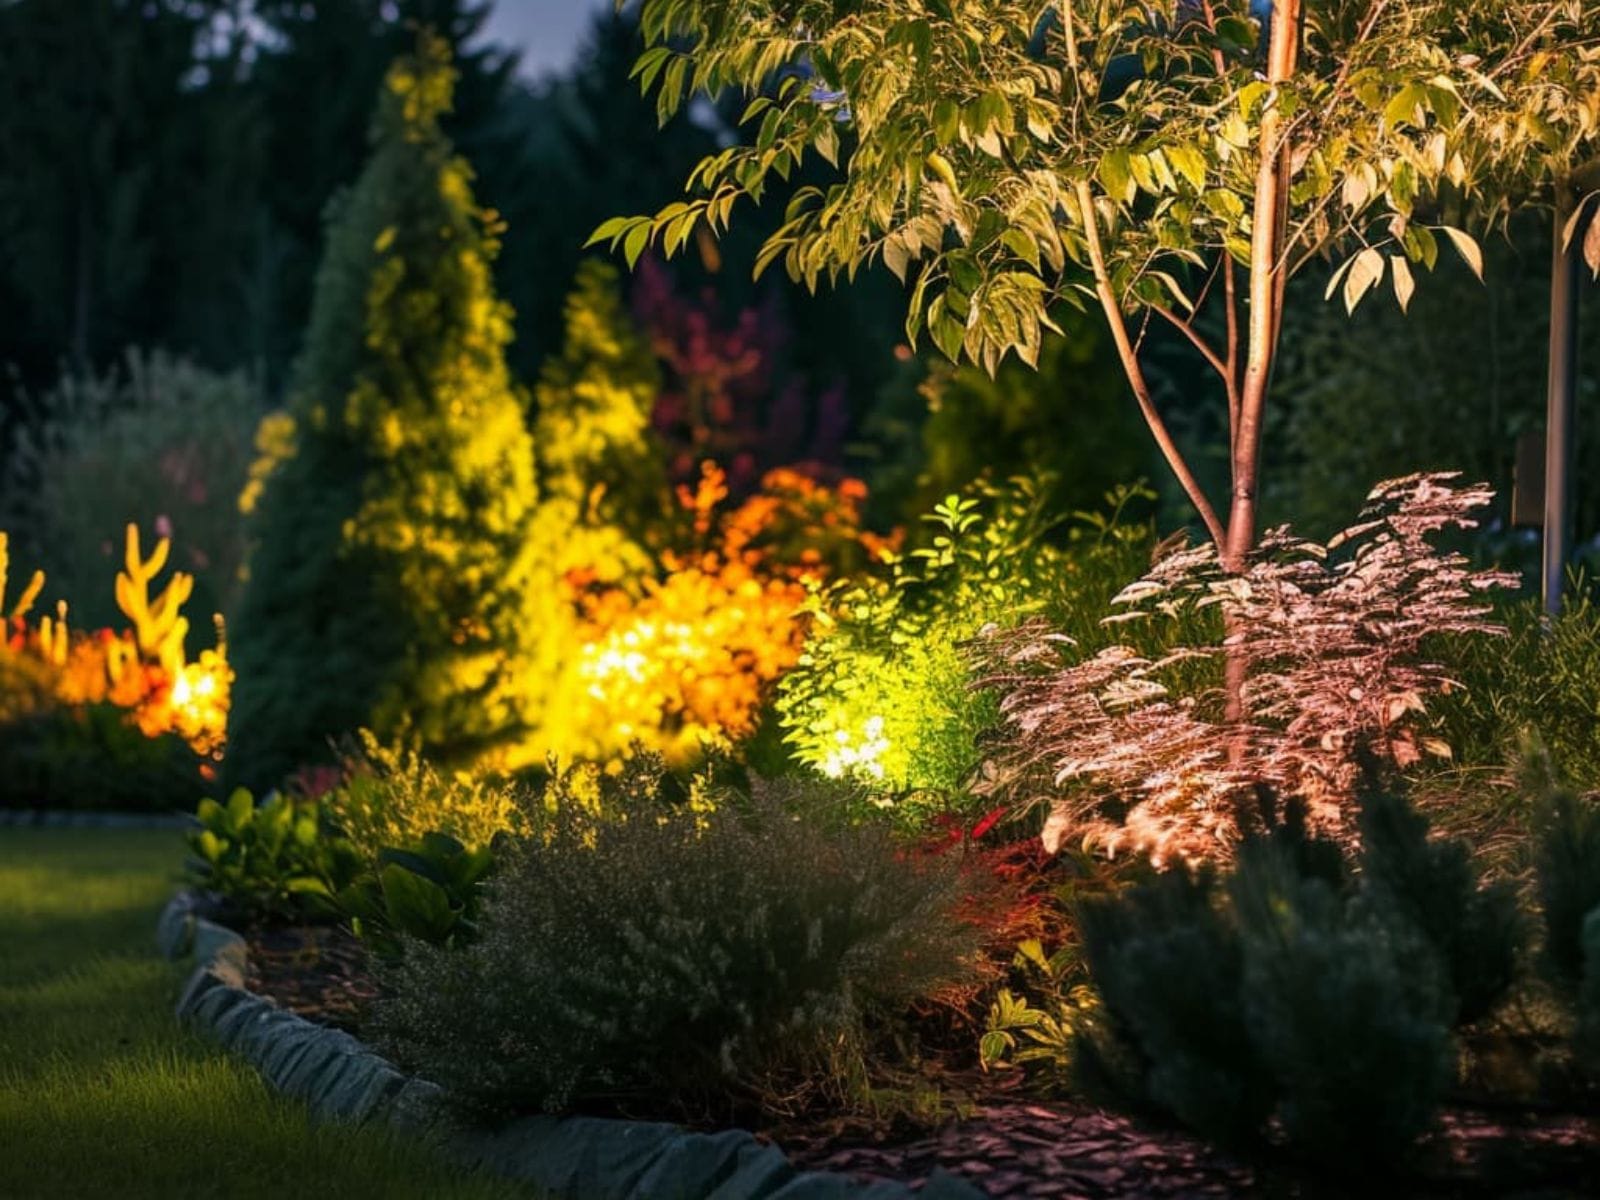 LED landscape lights illuminating garden shrubs and trees